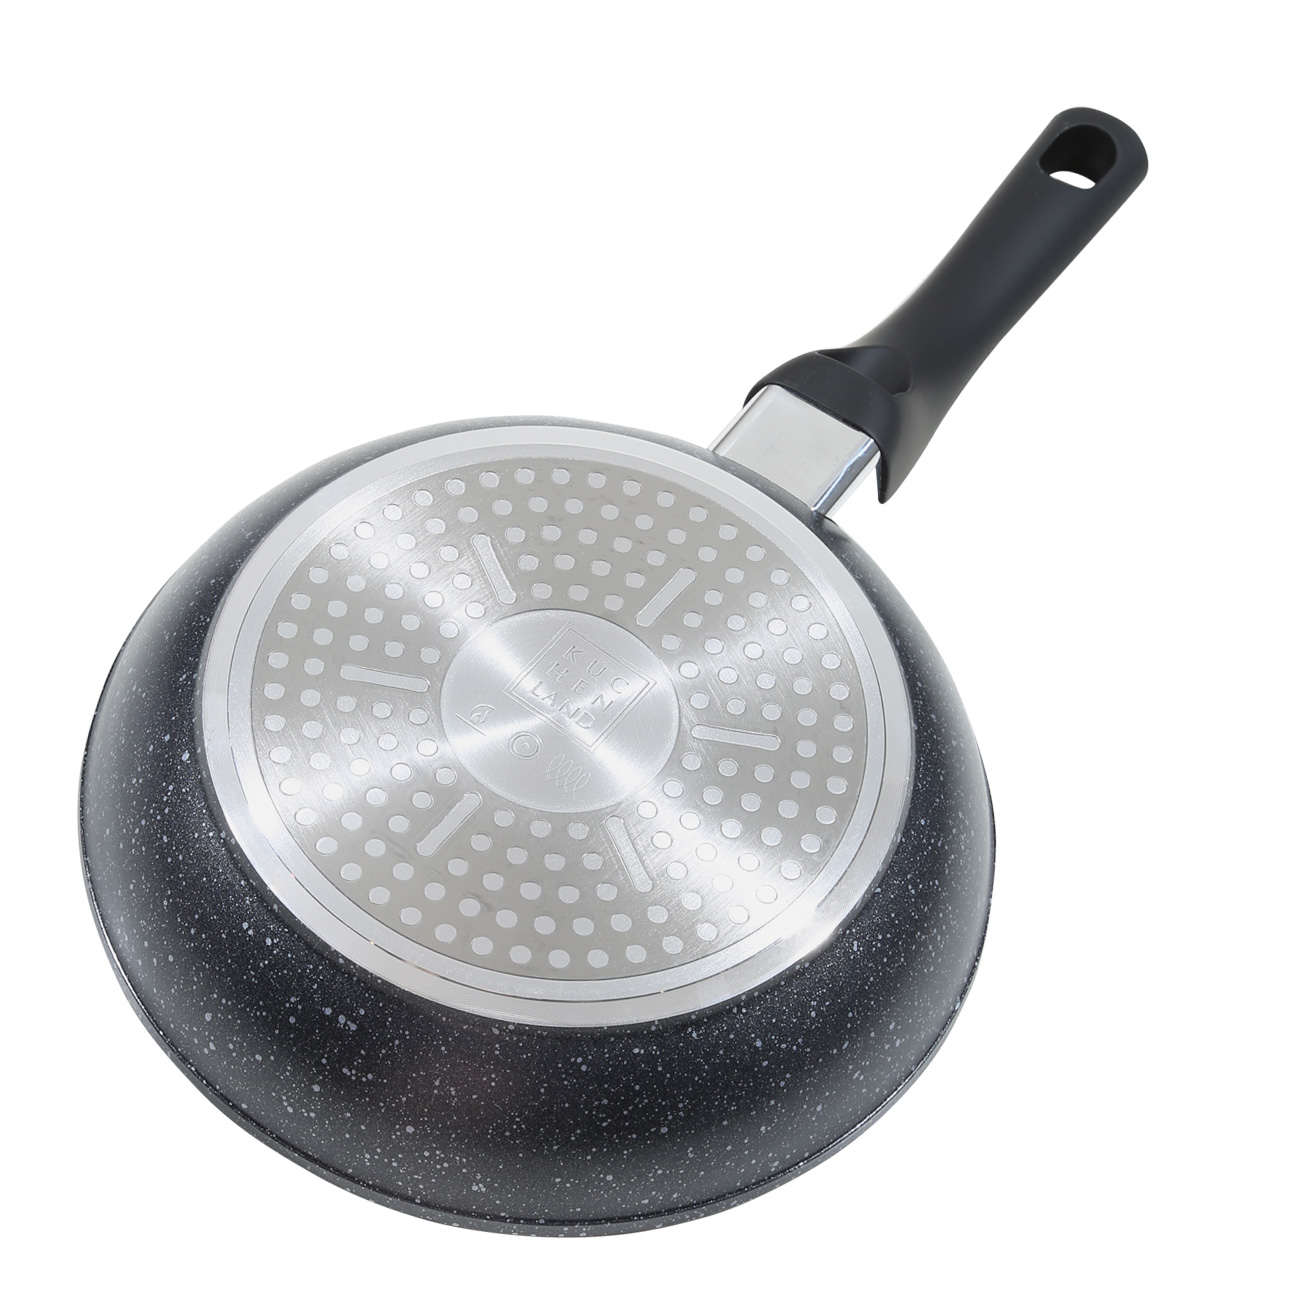 Frying pan, 24 cm, coated, aluminum, Proper изображение № 3